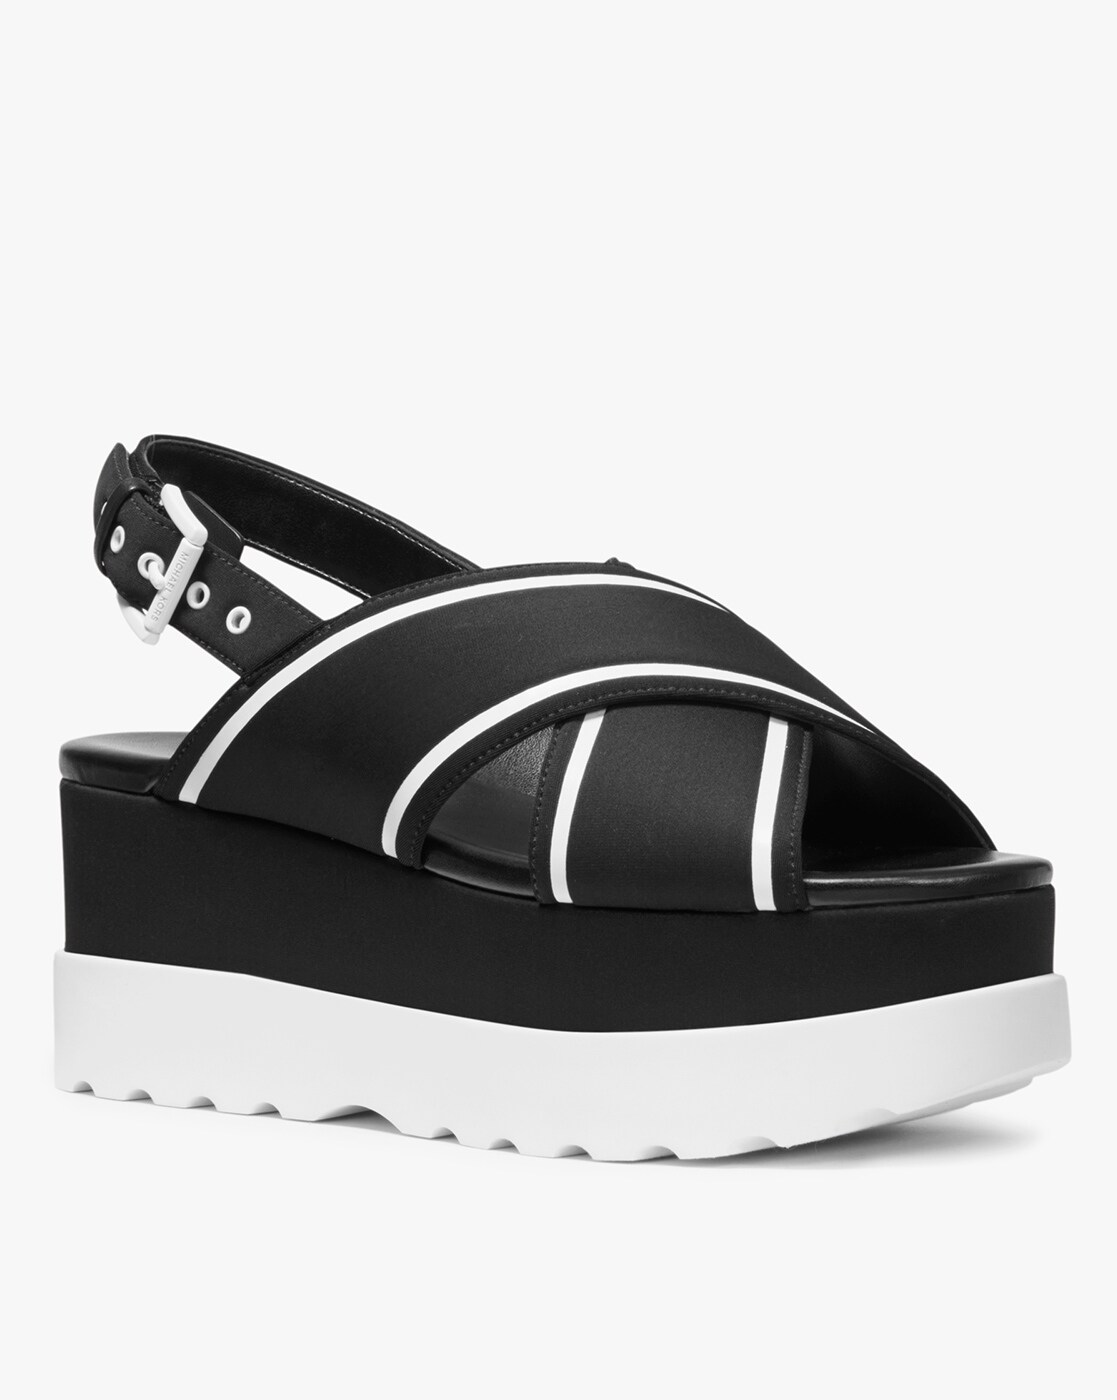 Buy Black Heeled Sandals for Women by Michael Kors Online 